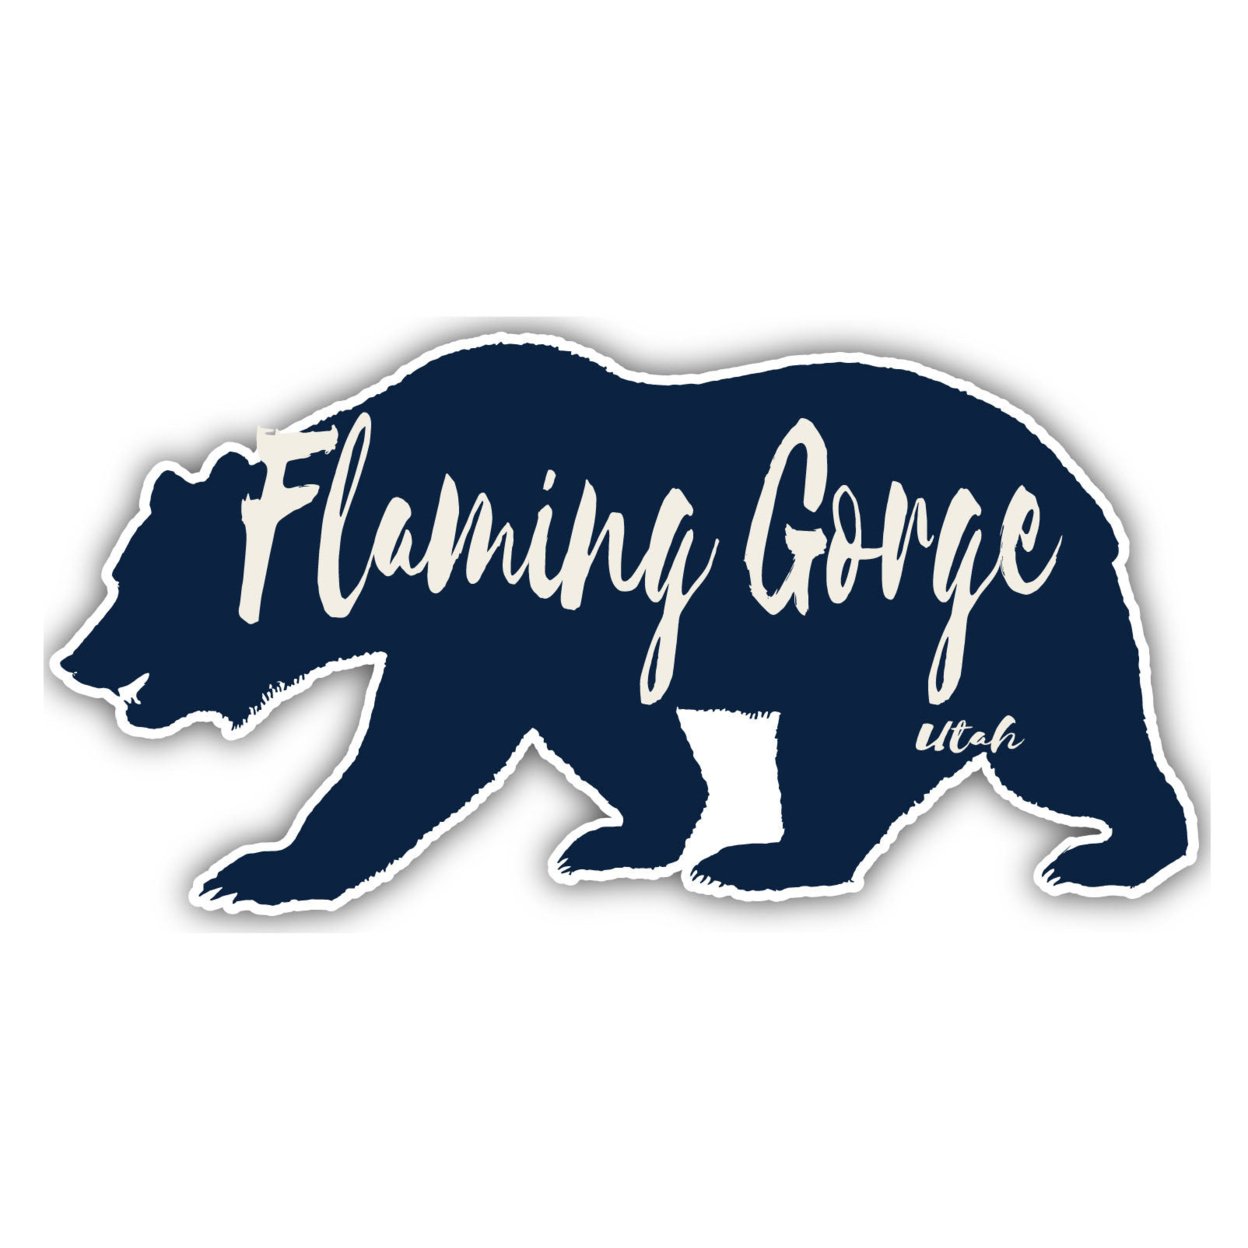 Flaming Gorge Utah Souvenir Decorative Stickers (Choose Theme And Size) - Single Unit, 2-Inch, Bear